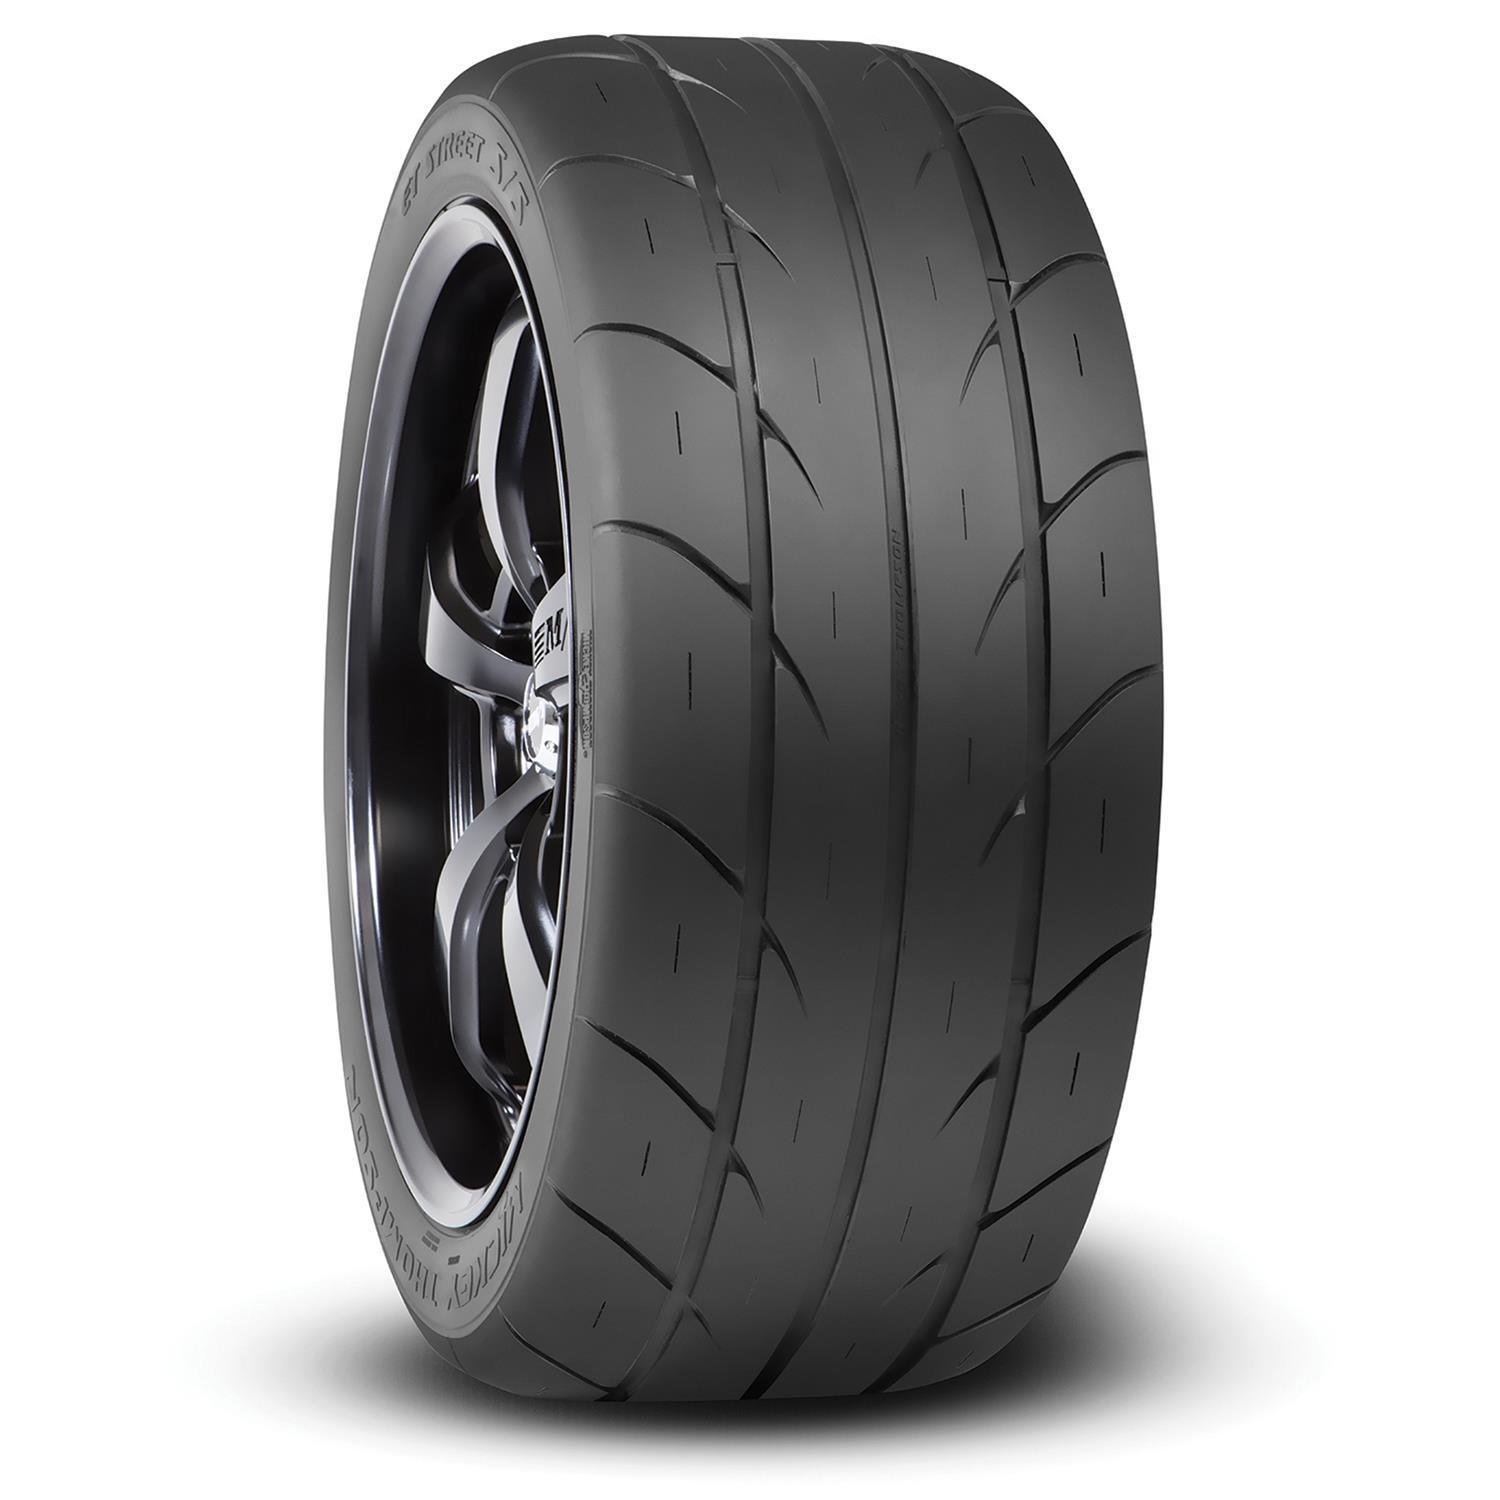 P275/40R20 ET Street S/S Tire - Burlile Performance Products